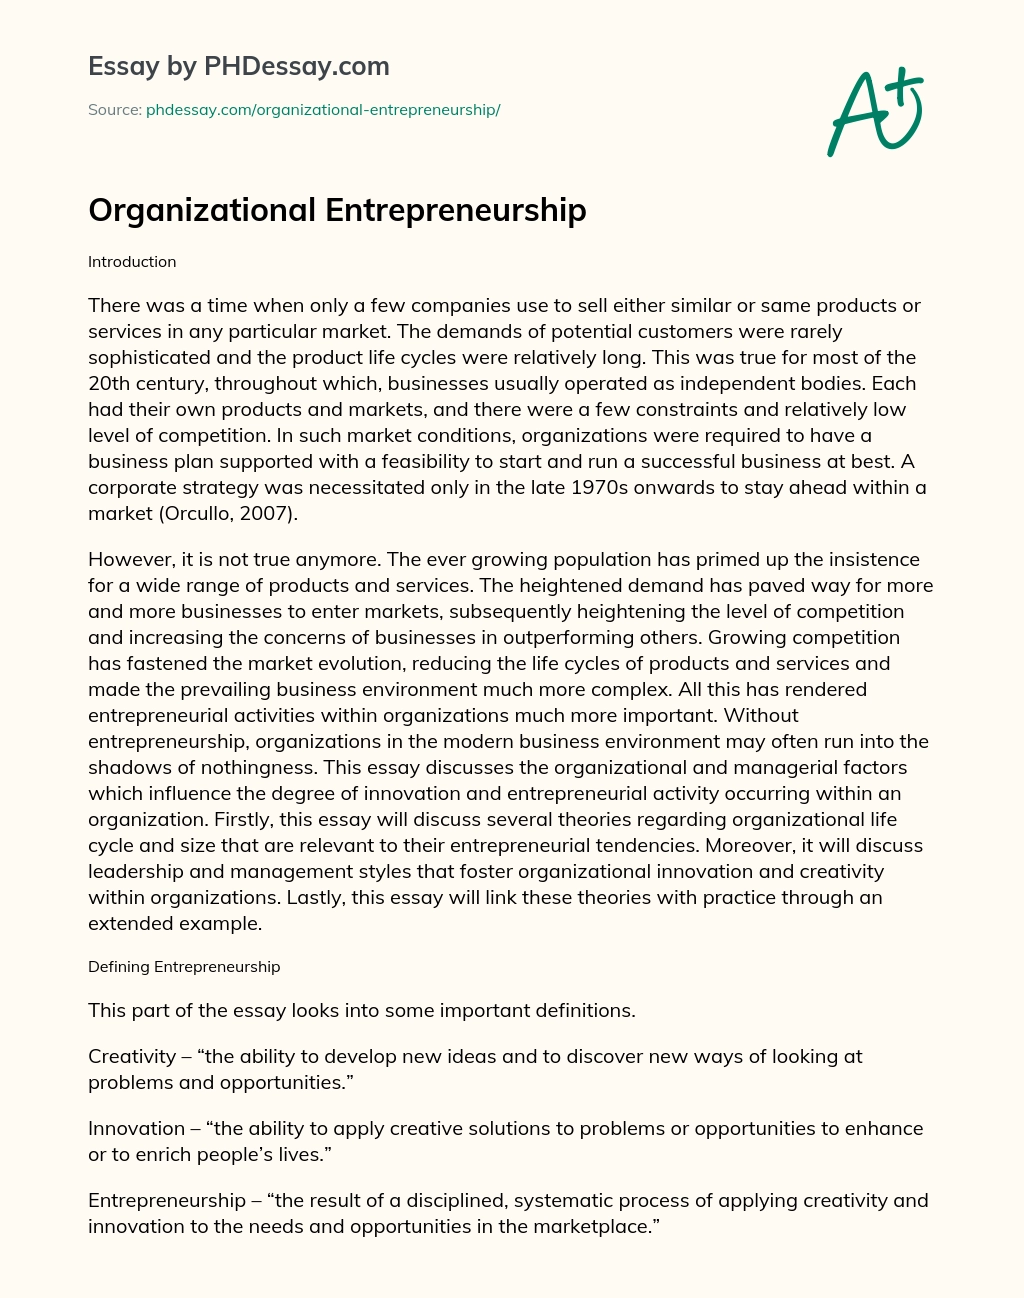 Organizational Entrepreneurship essay